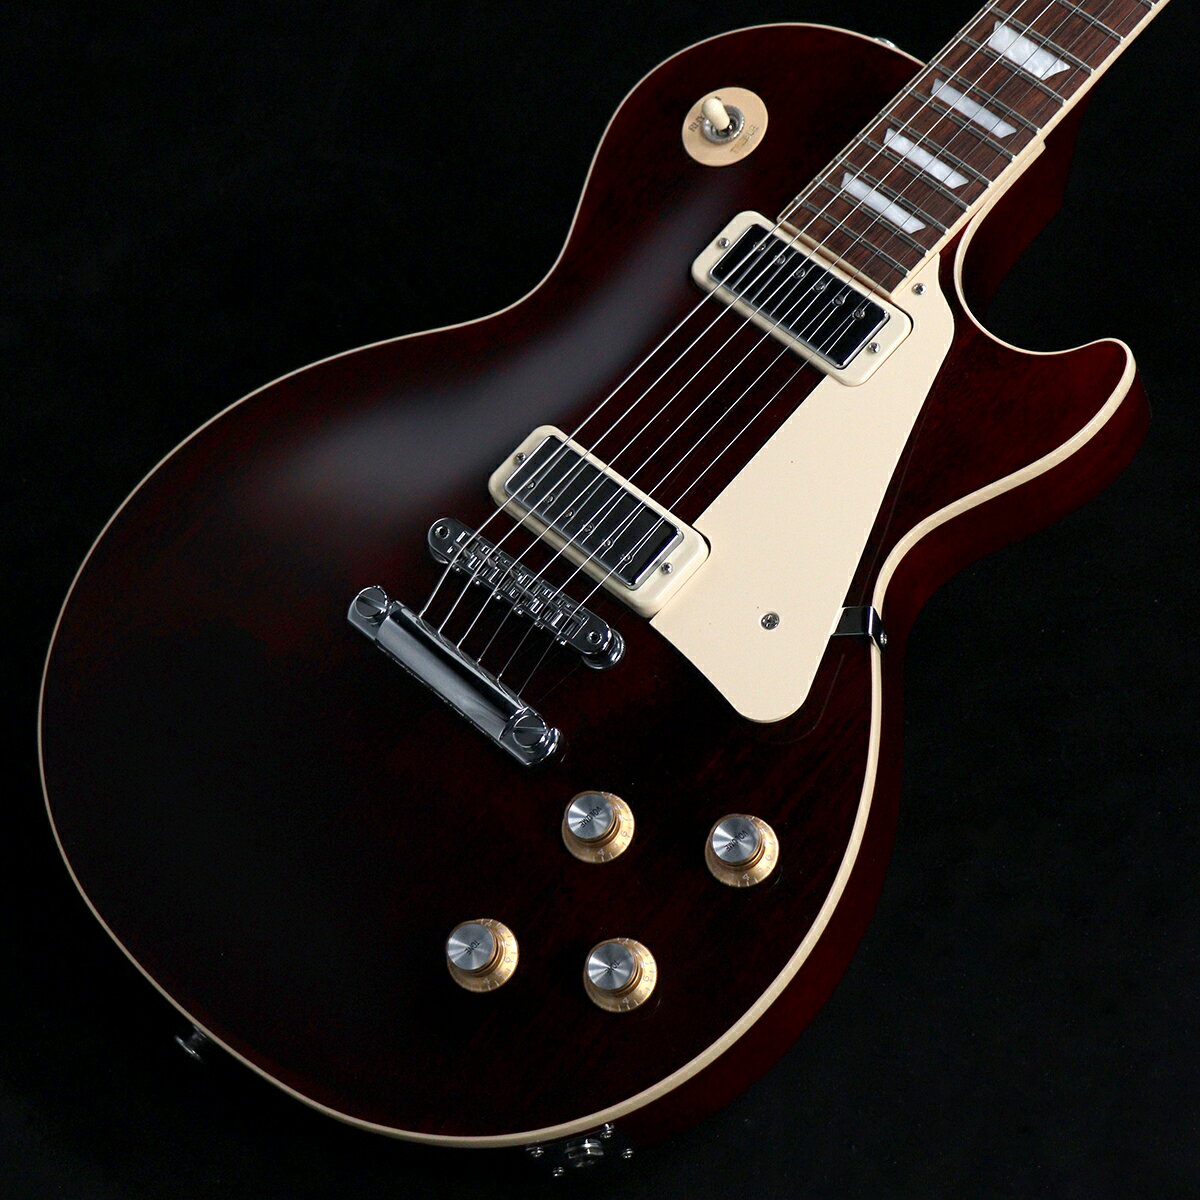 Gibson USA / Les Paul 70s Deluxe Wine Red(重量:4.38kg)【チョイキズ特価】【S/N:234820019】【渋谷店】【YRK】